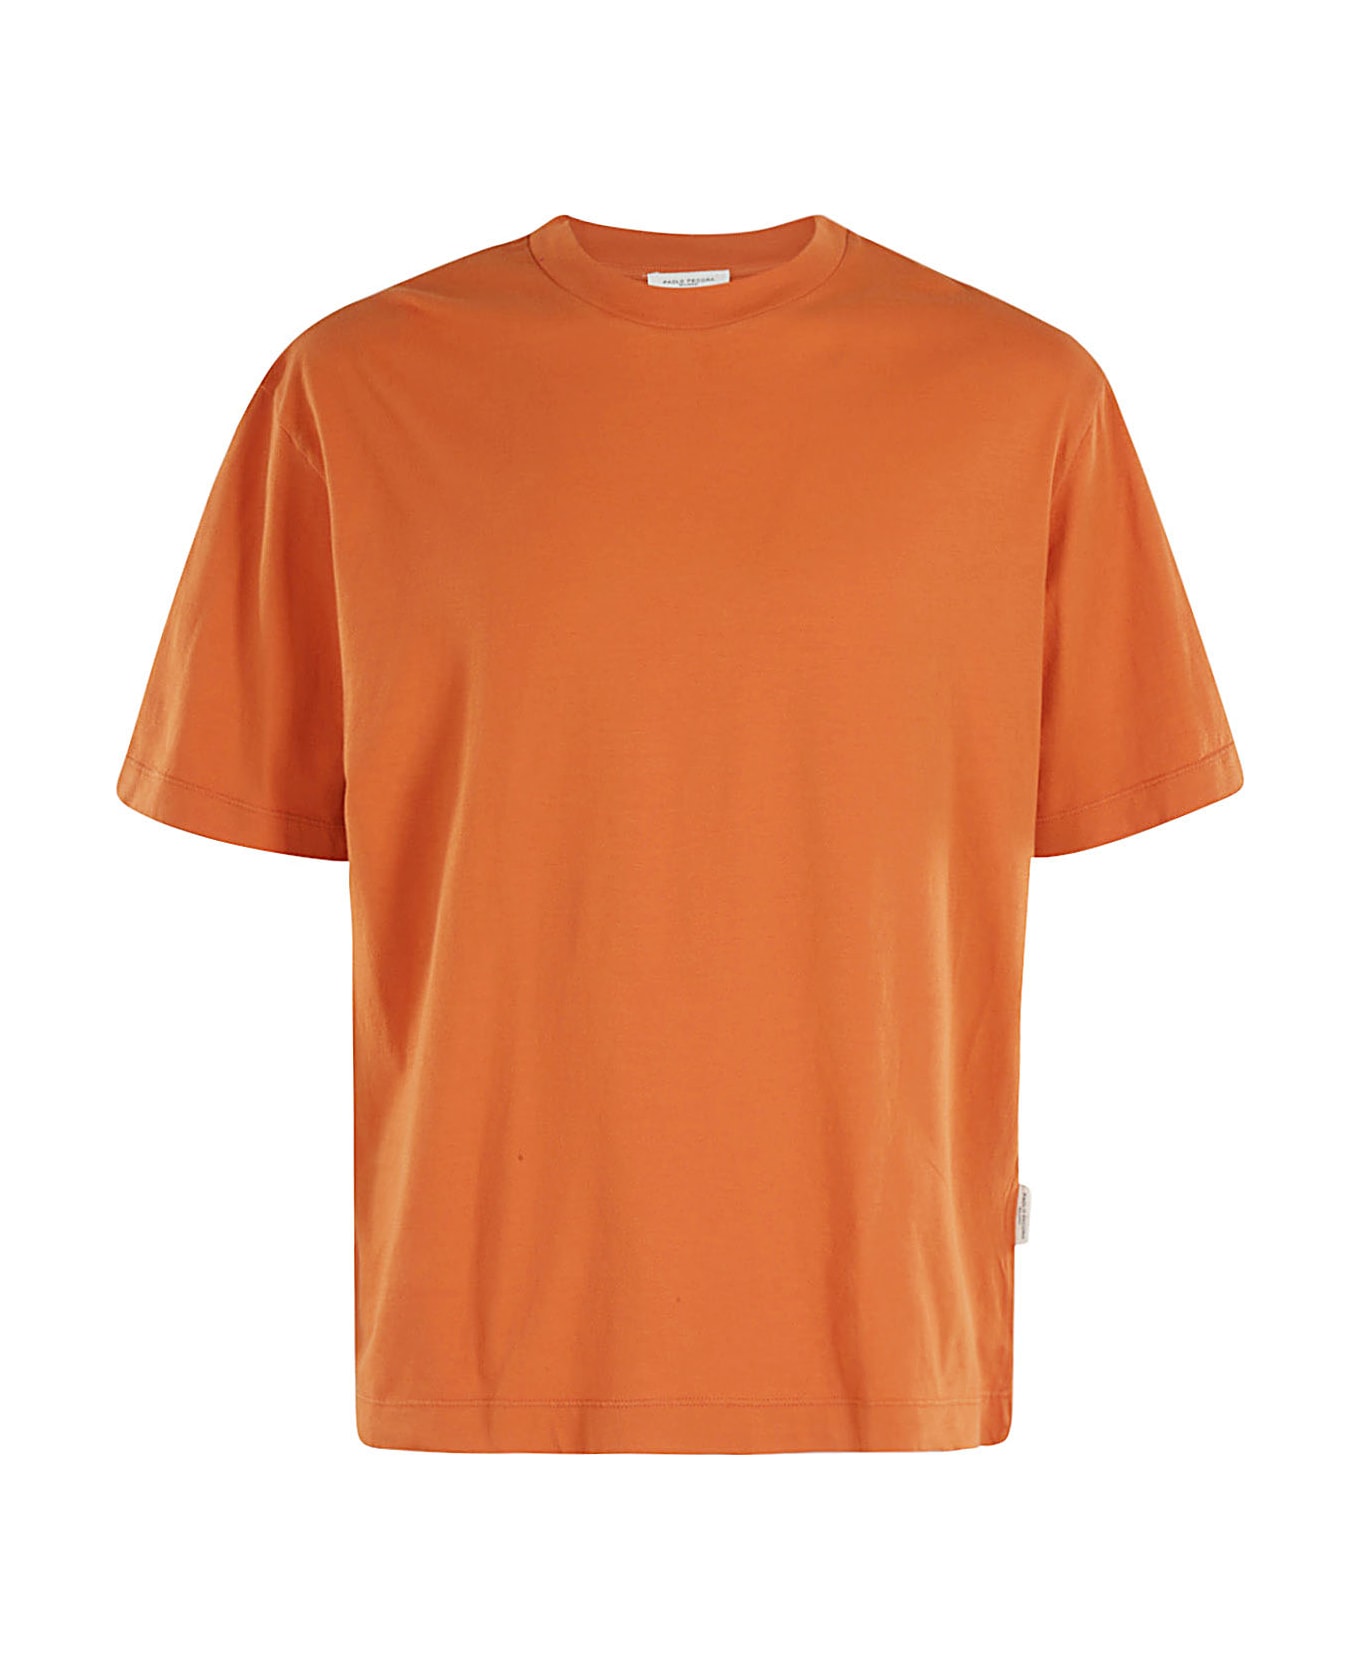 Paolo Pecora T Shirt Jersey - Arancio シャツ